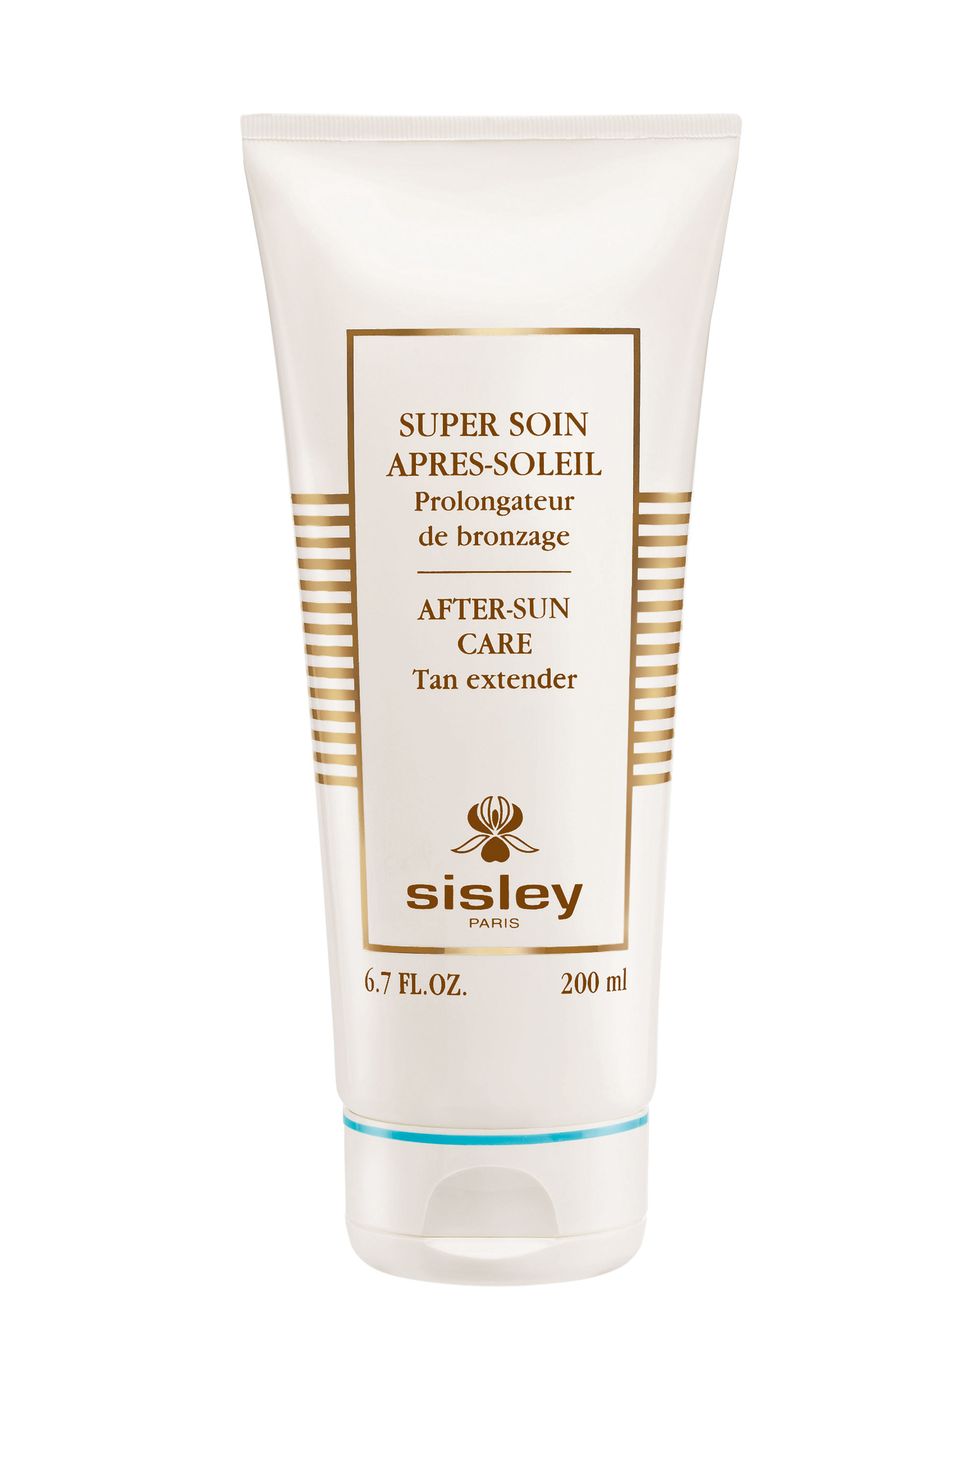 Sisley After-Sun Care Tan extender